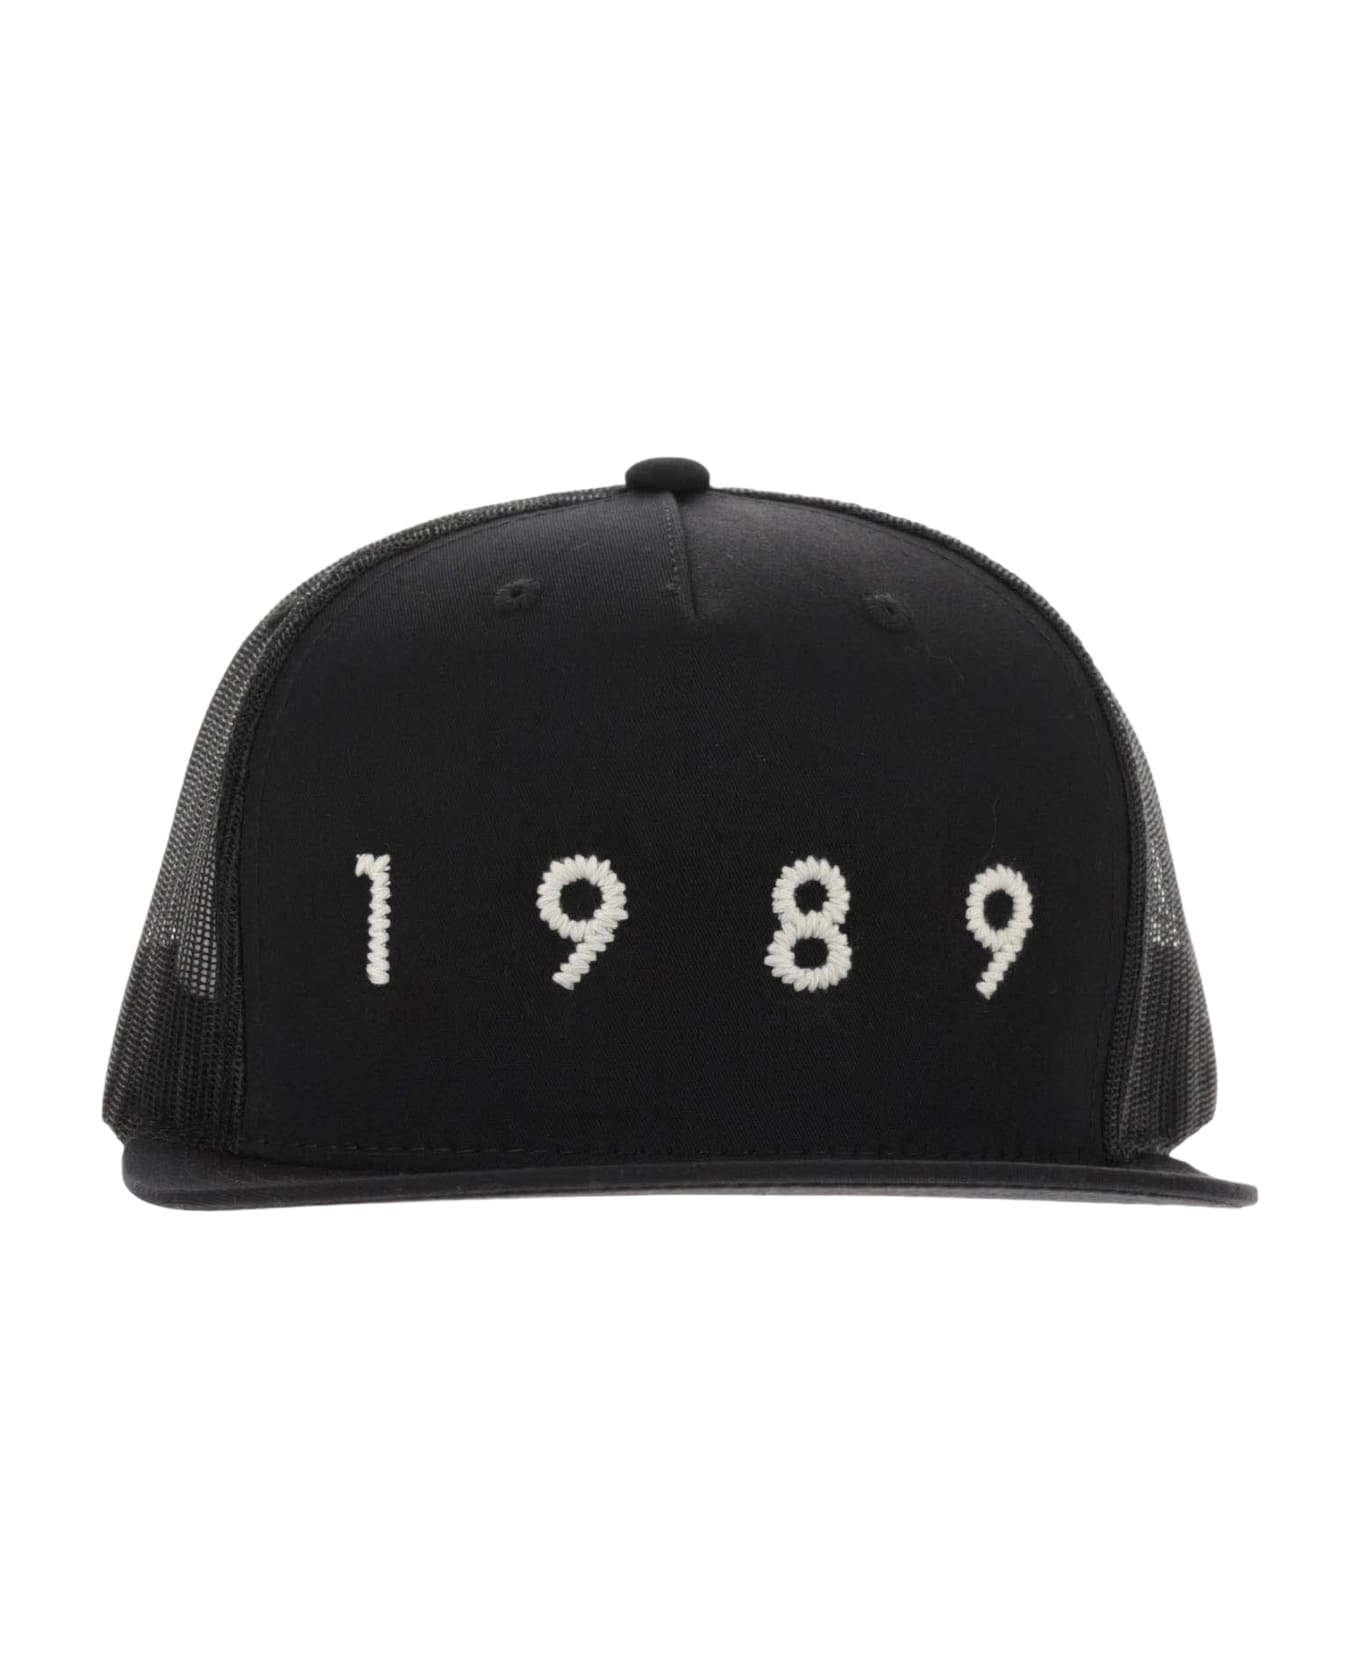 1989 Studio 1989 Baseball Cap - Black